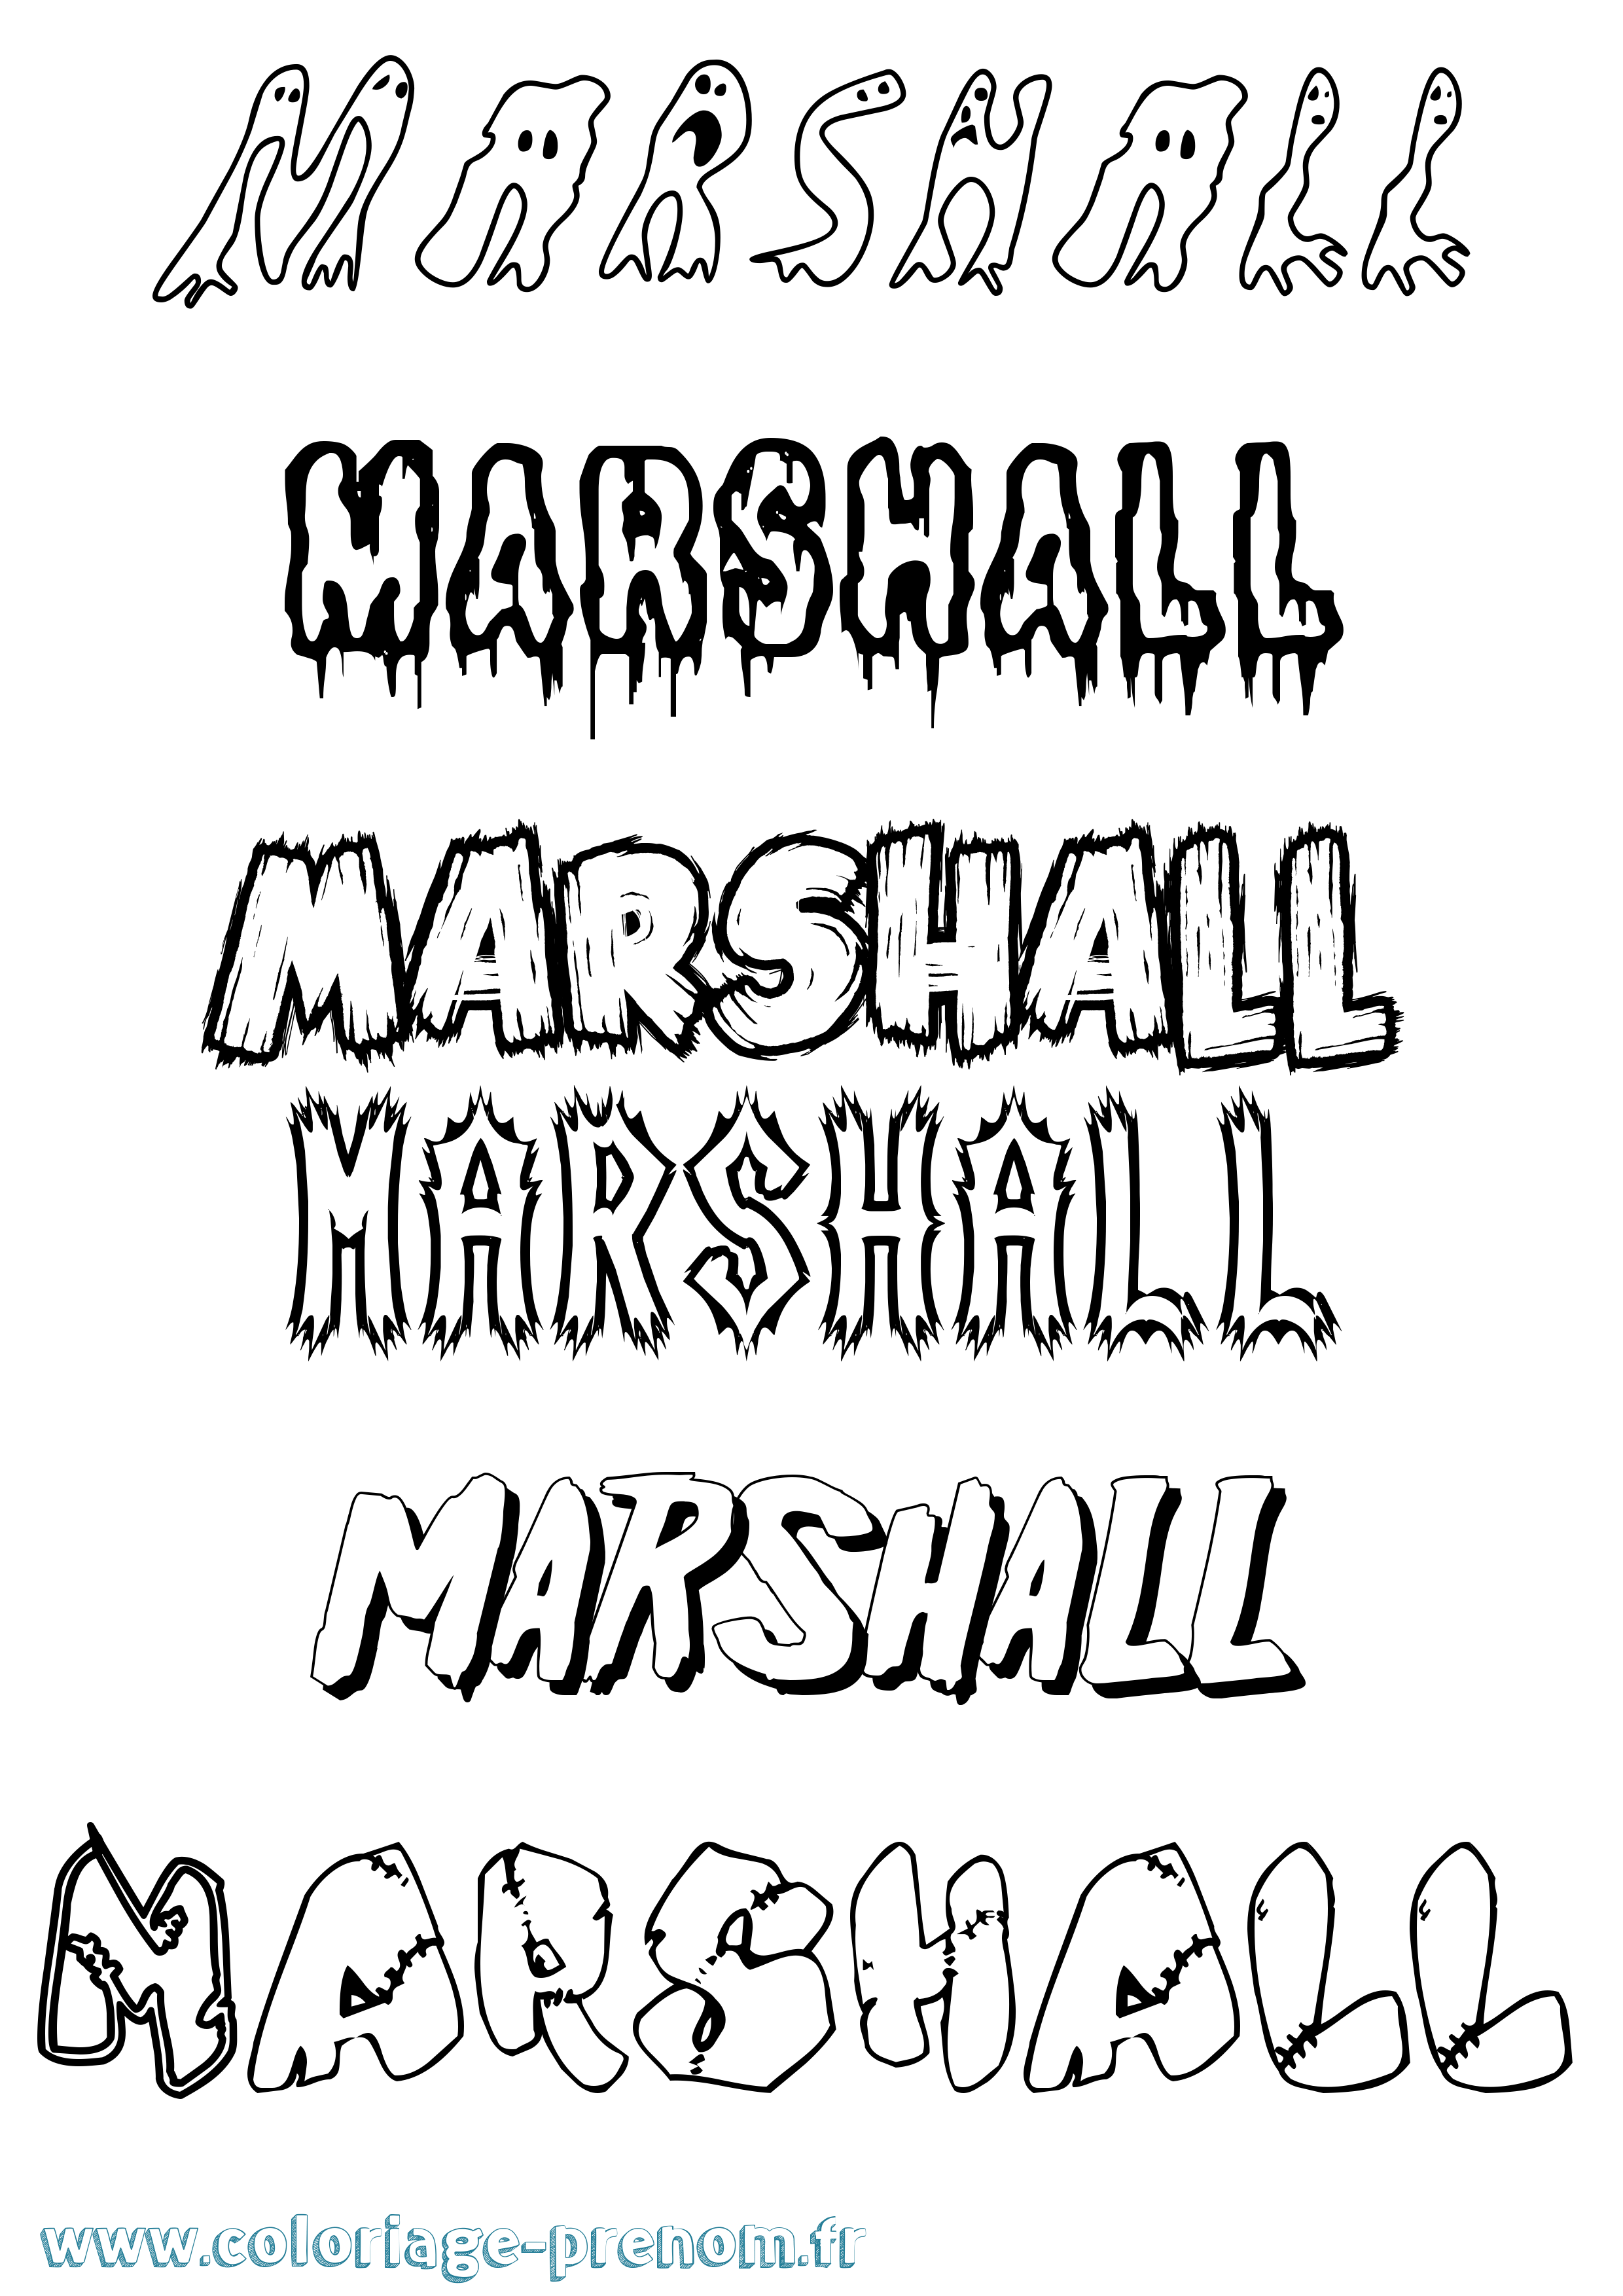 Coloriage prénom Marshall Frisson